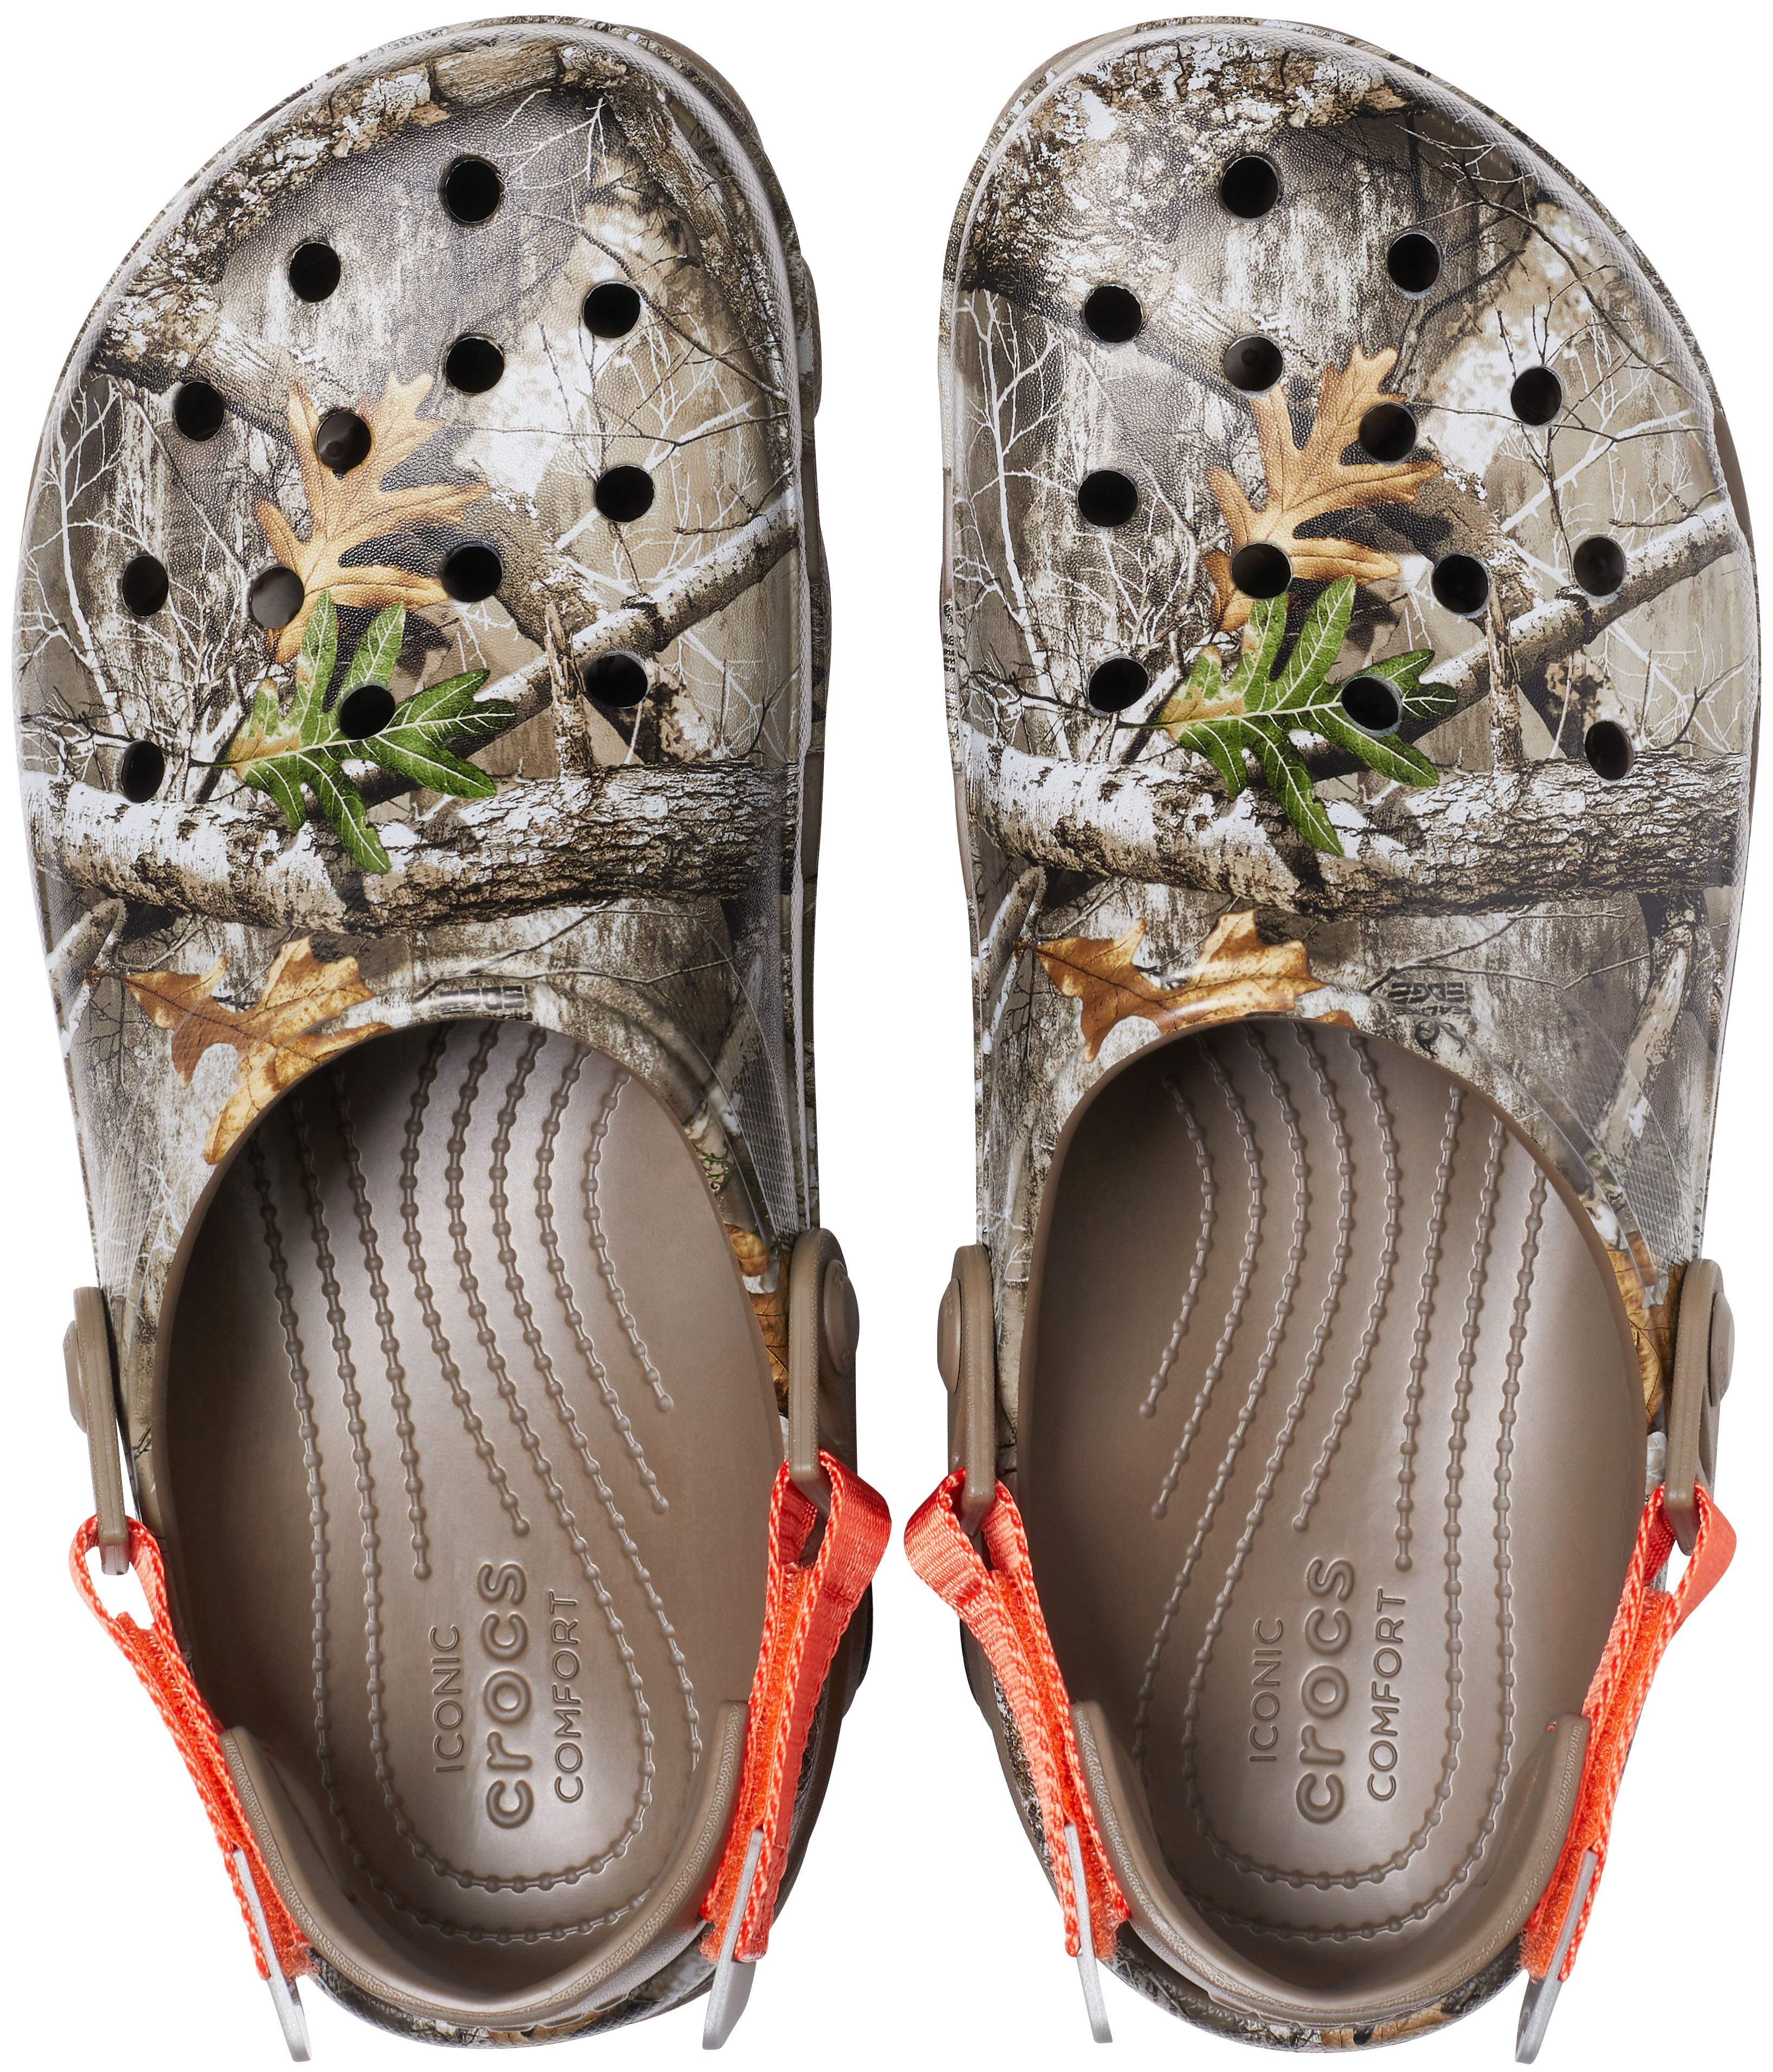 classic realtree edge crocs